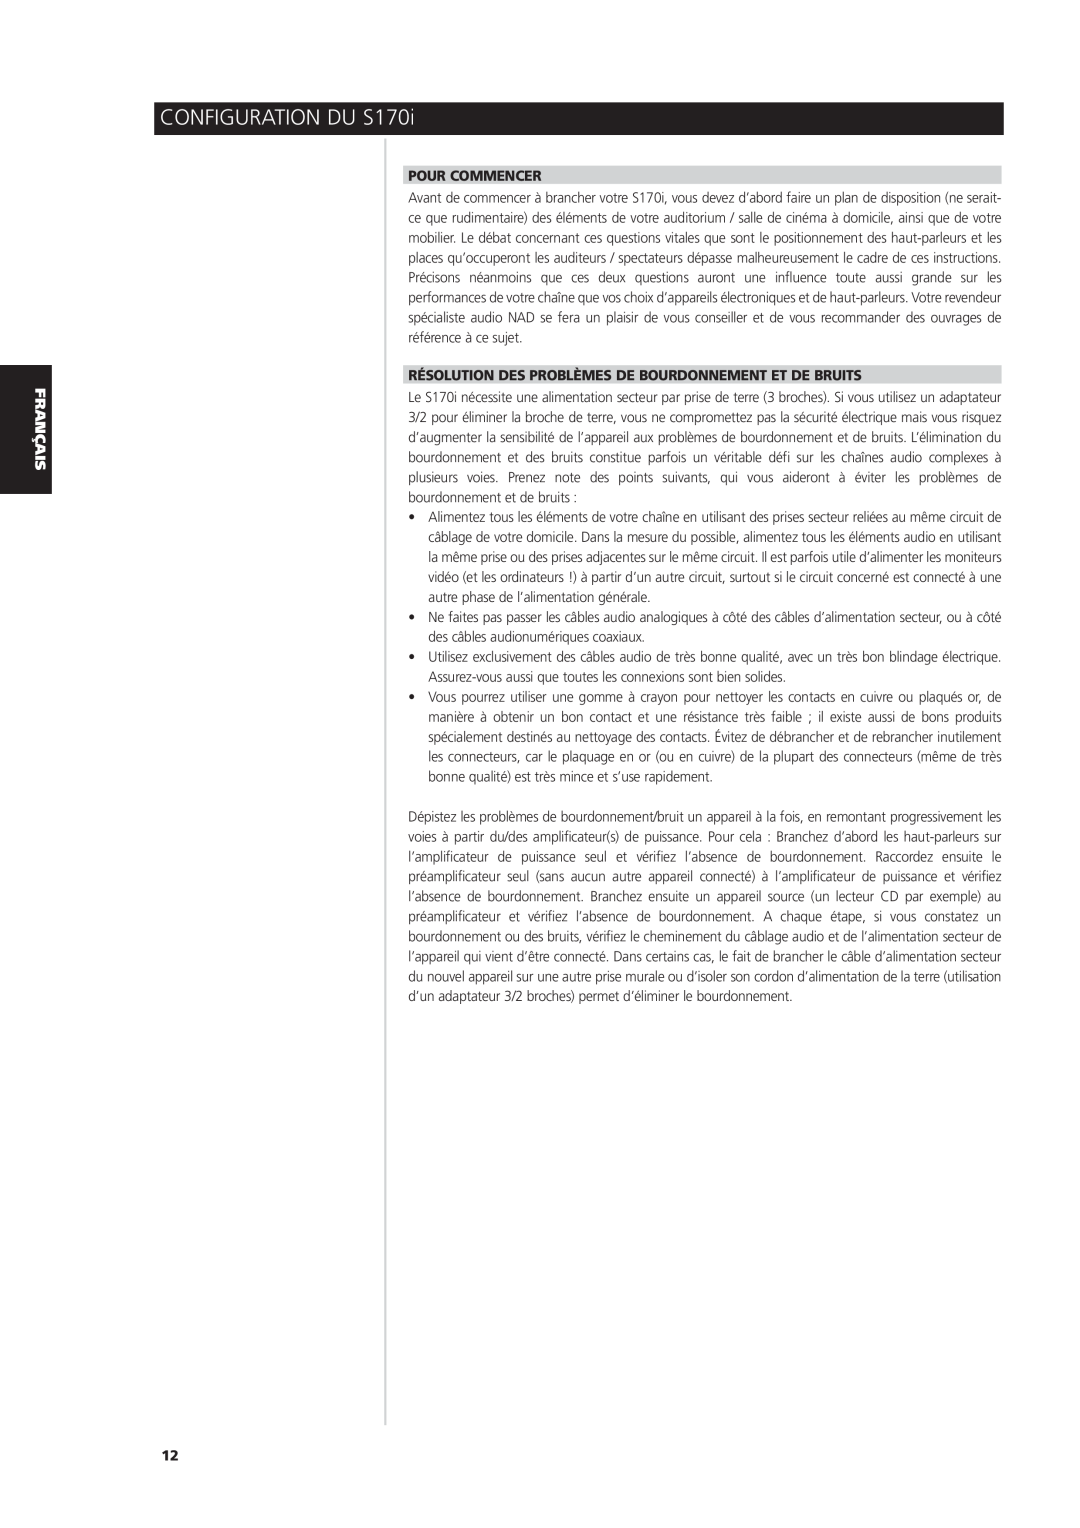 NAD S170iAV owner manual CONFIGURATION DU S170i, Pour Commencer 